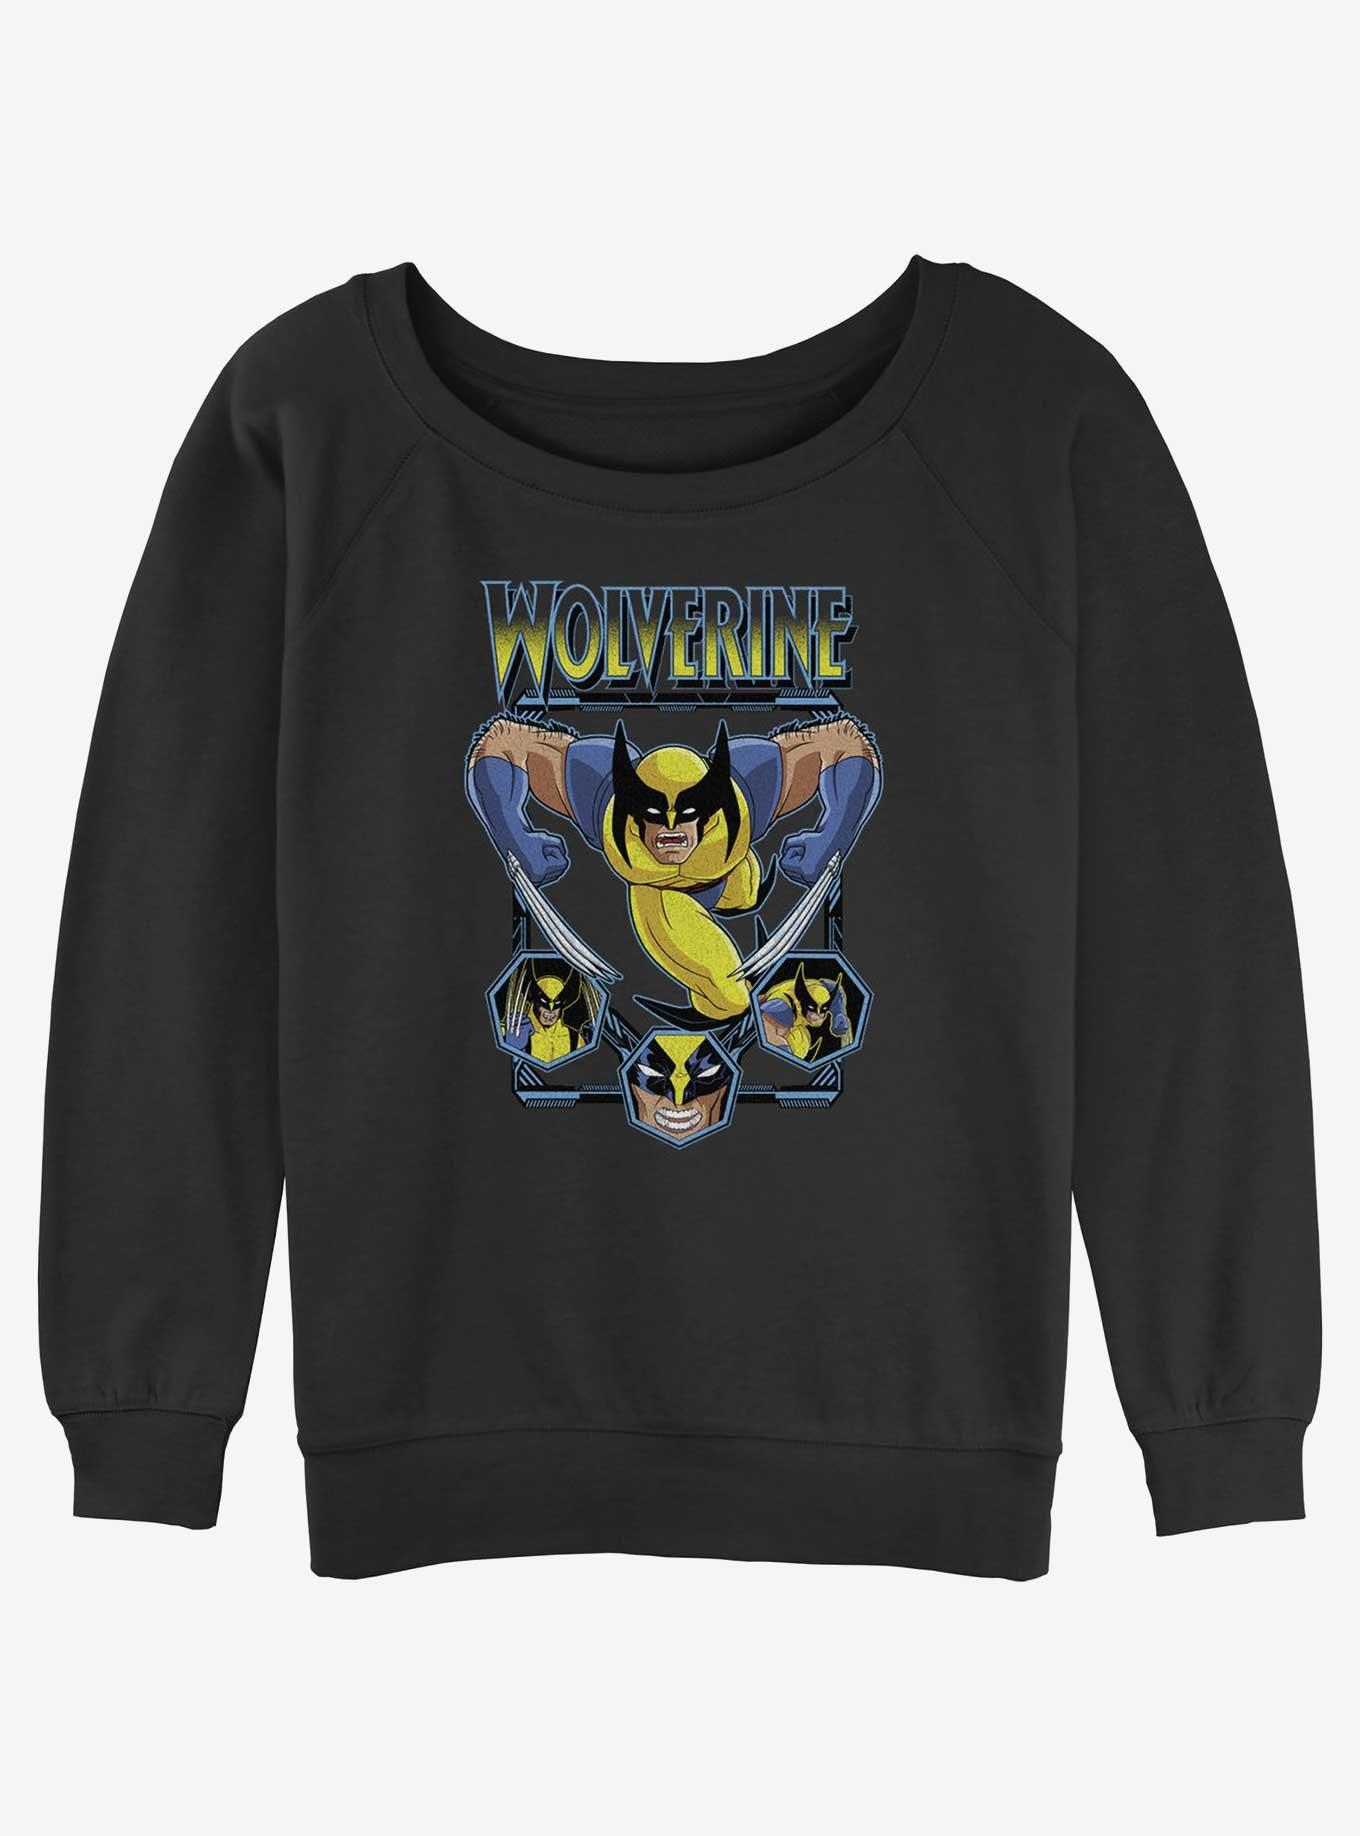 Wolverine Animated Attack Womens Slouchy Sweatshirt, BLACK, hi-res